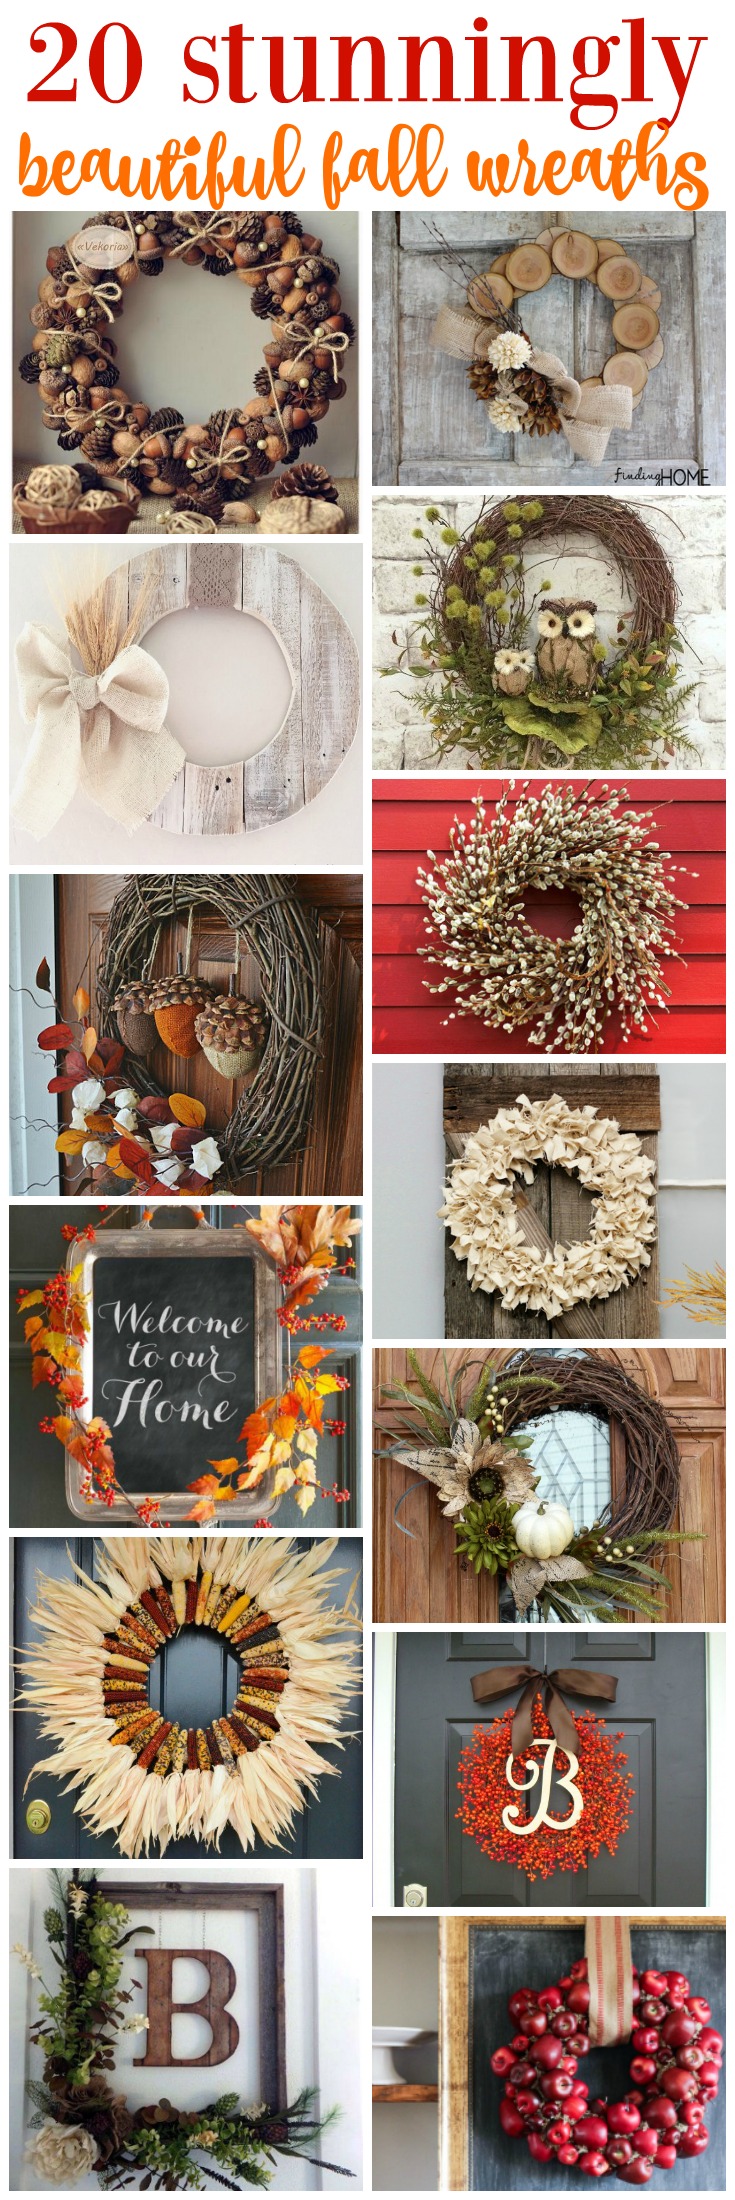 20-stunningly-beautiful-fall-wreaths